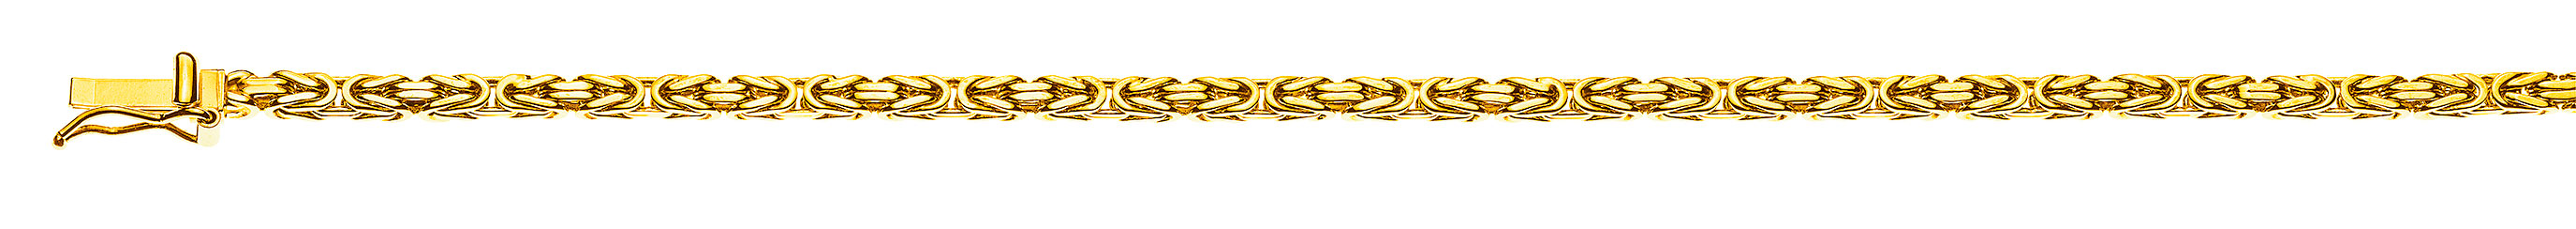 AURONOS Prestige Necklace Yellow Gold 18K King Chain 60cm 2.5mm